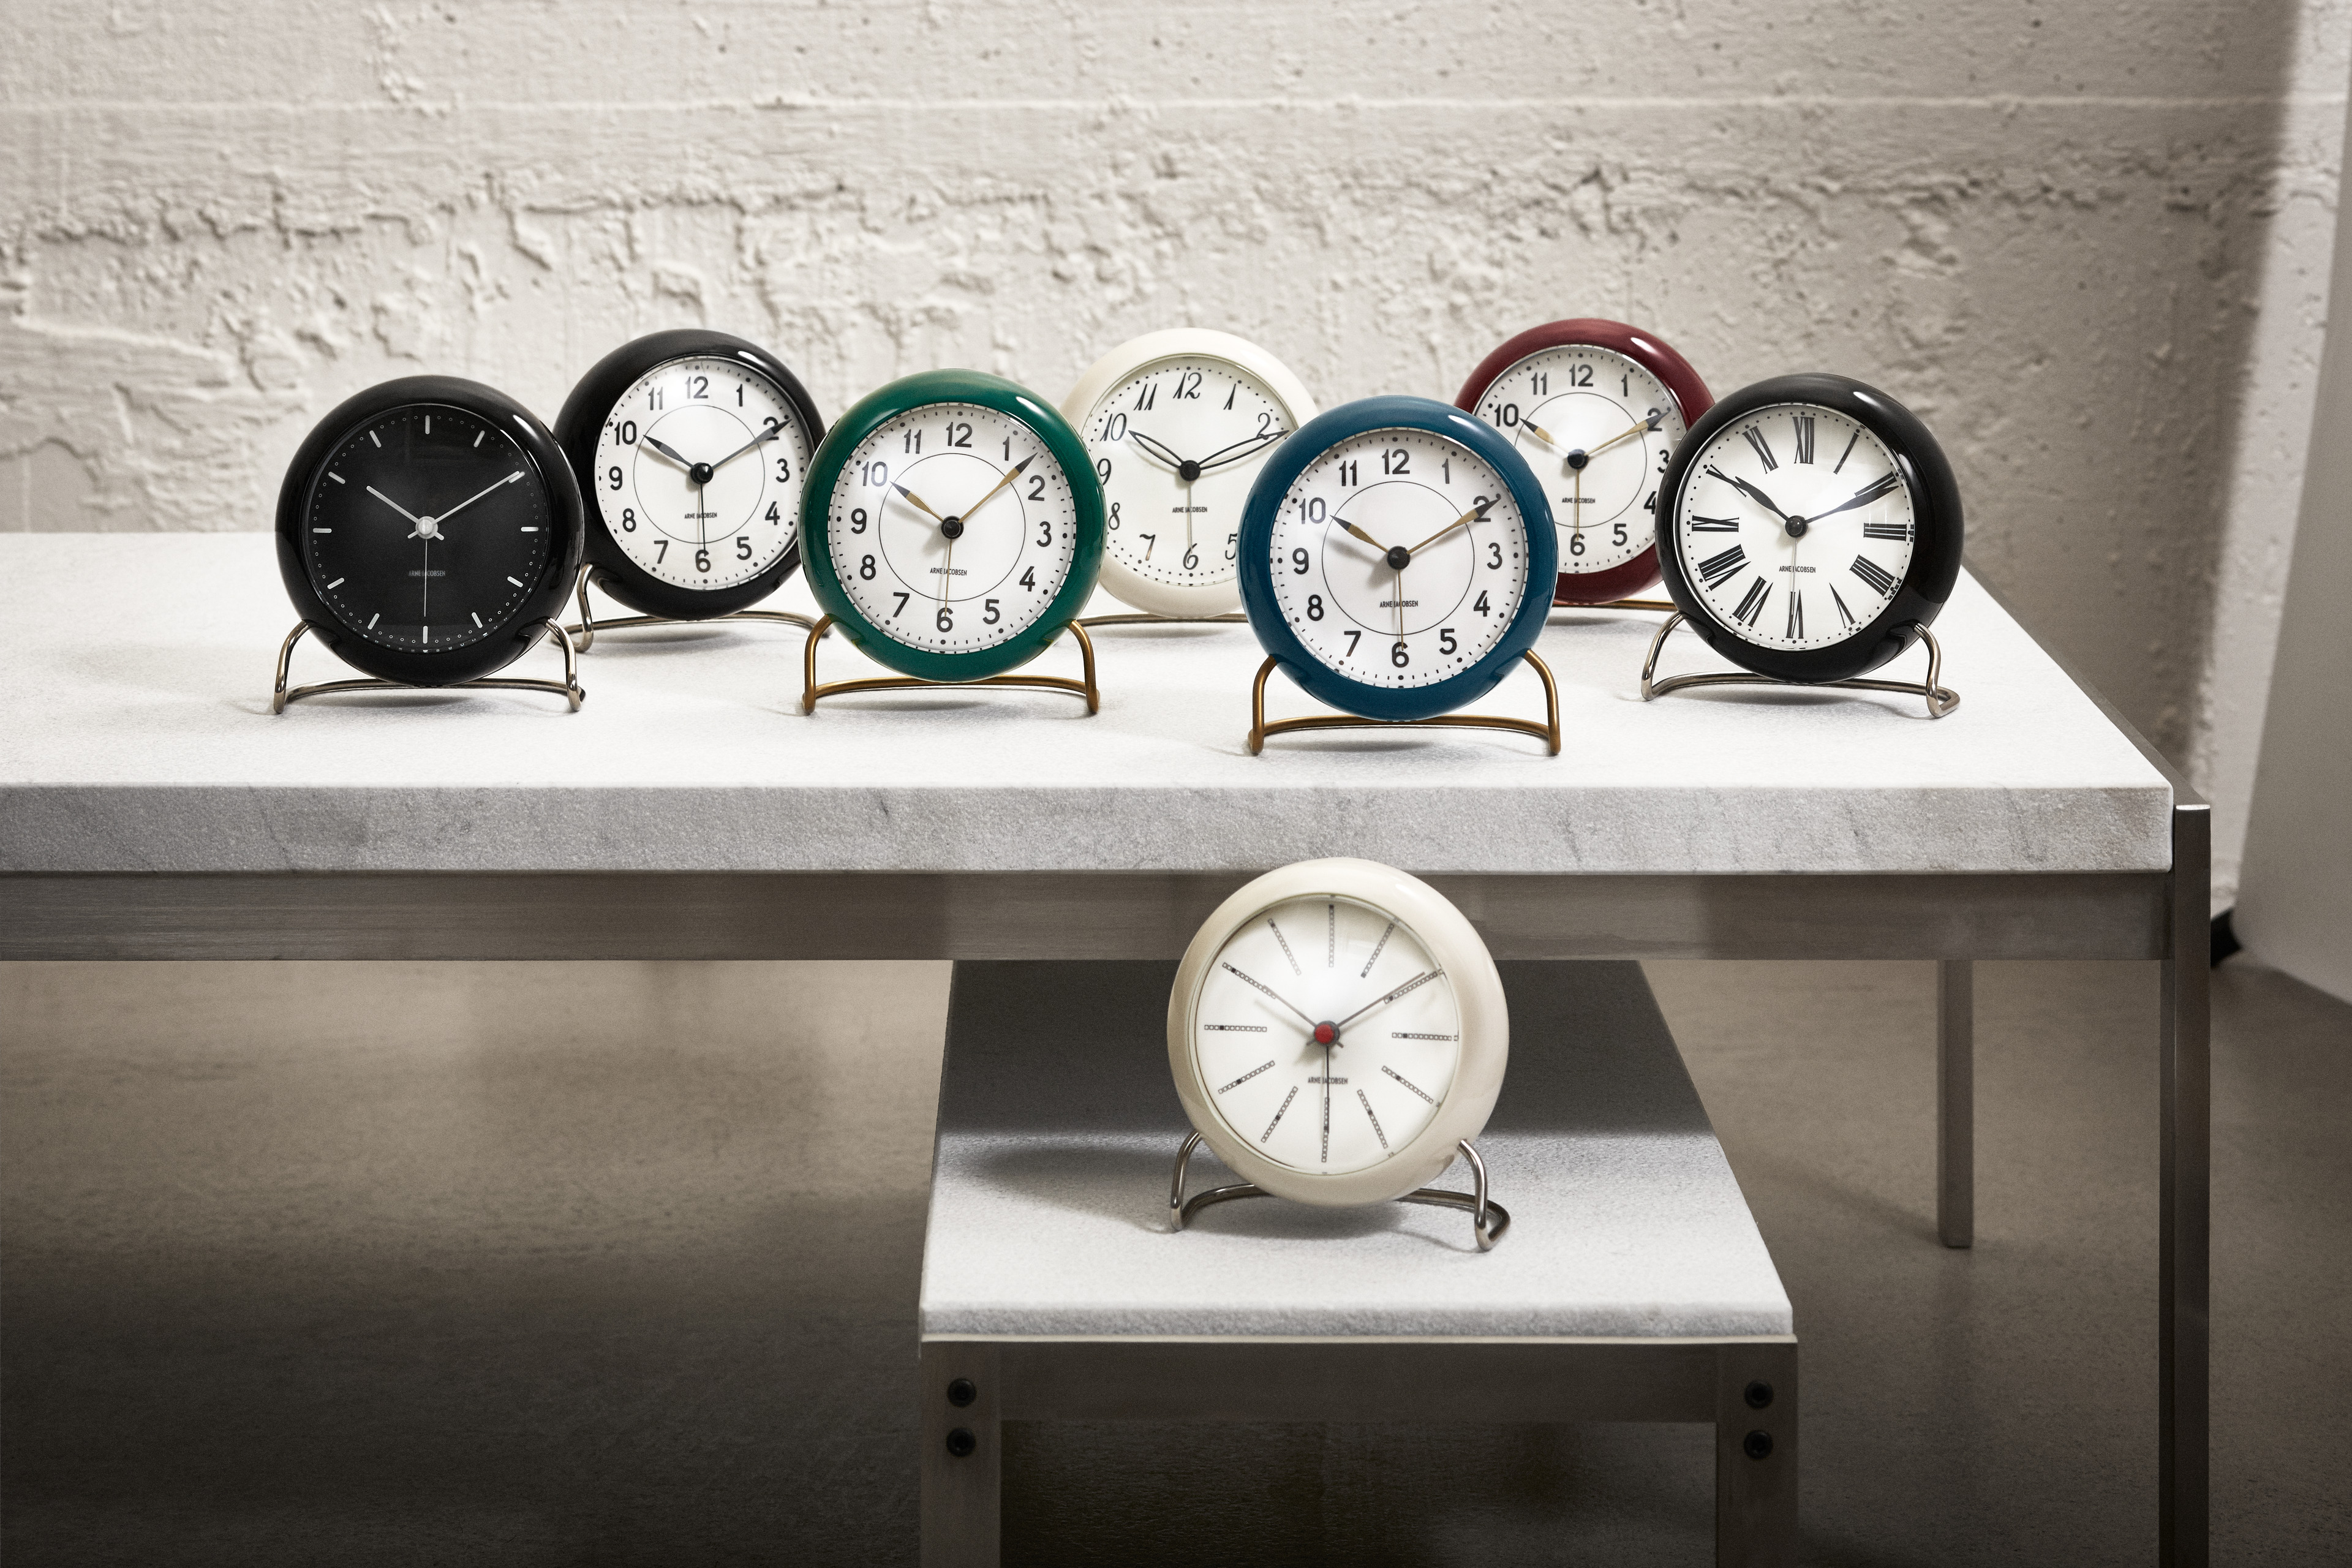 Bordsklockor av Arne Jacobsen Clocks i olika färger på bordet